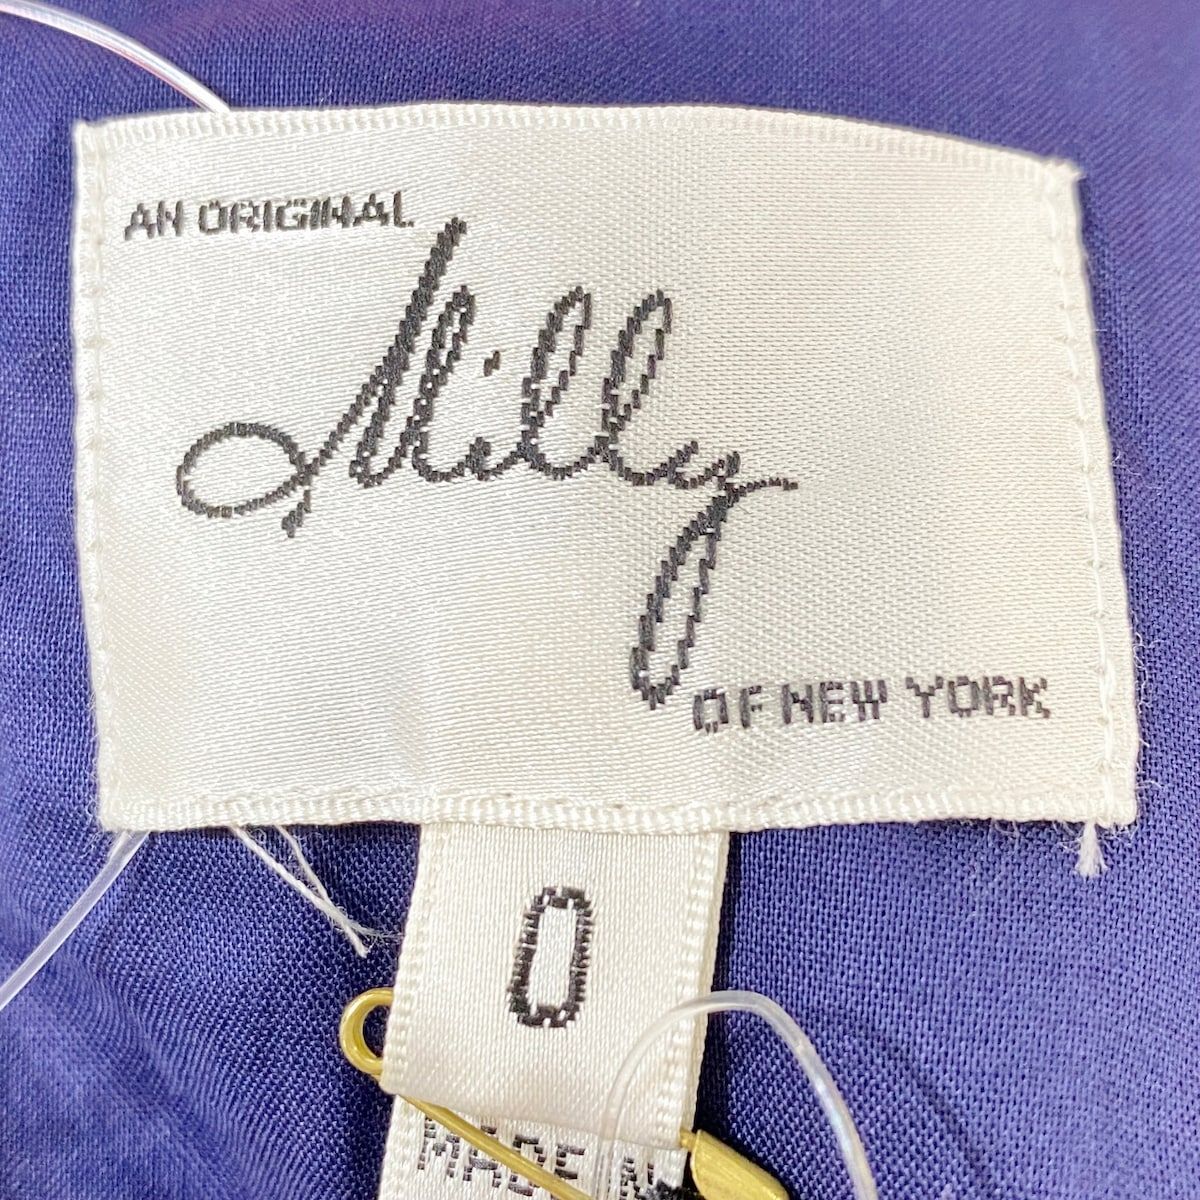 MILLY(ミリー) ロングスカート サイズ0 XS レディース美品 - ダークネイビー×レッド×ブラウン プリーツ